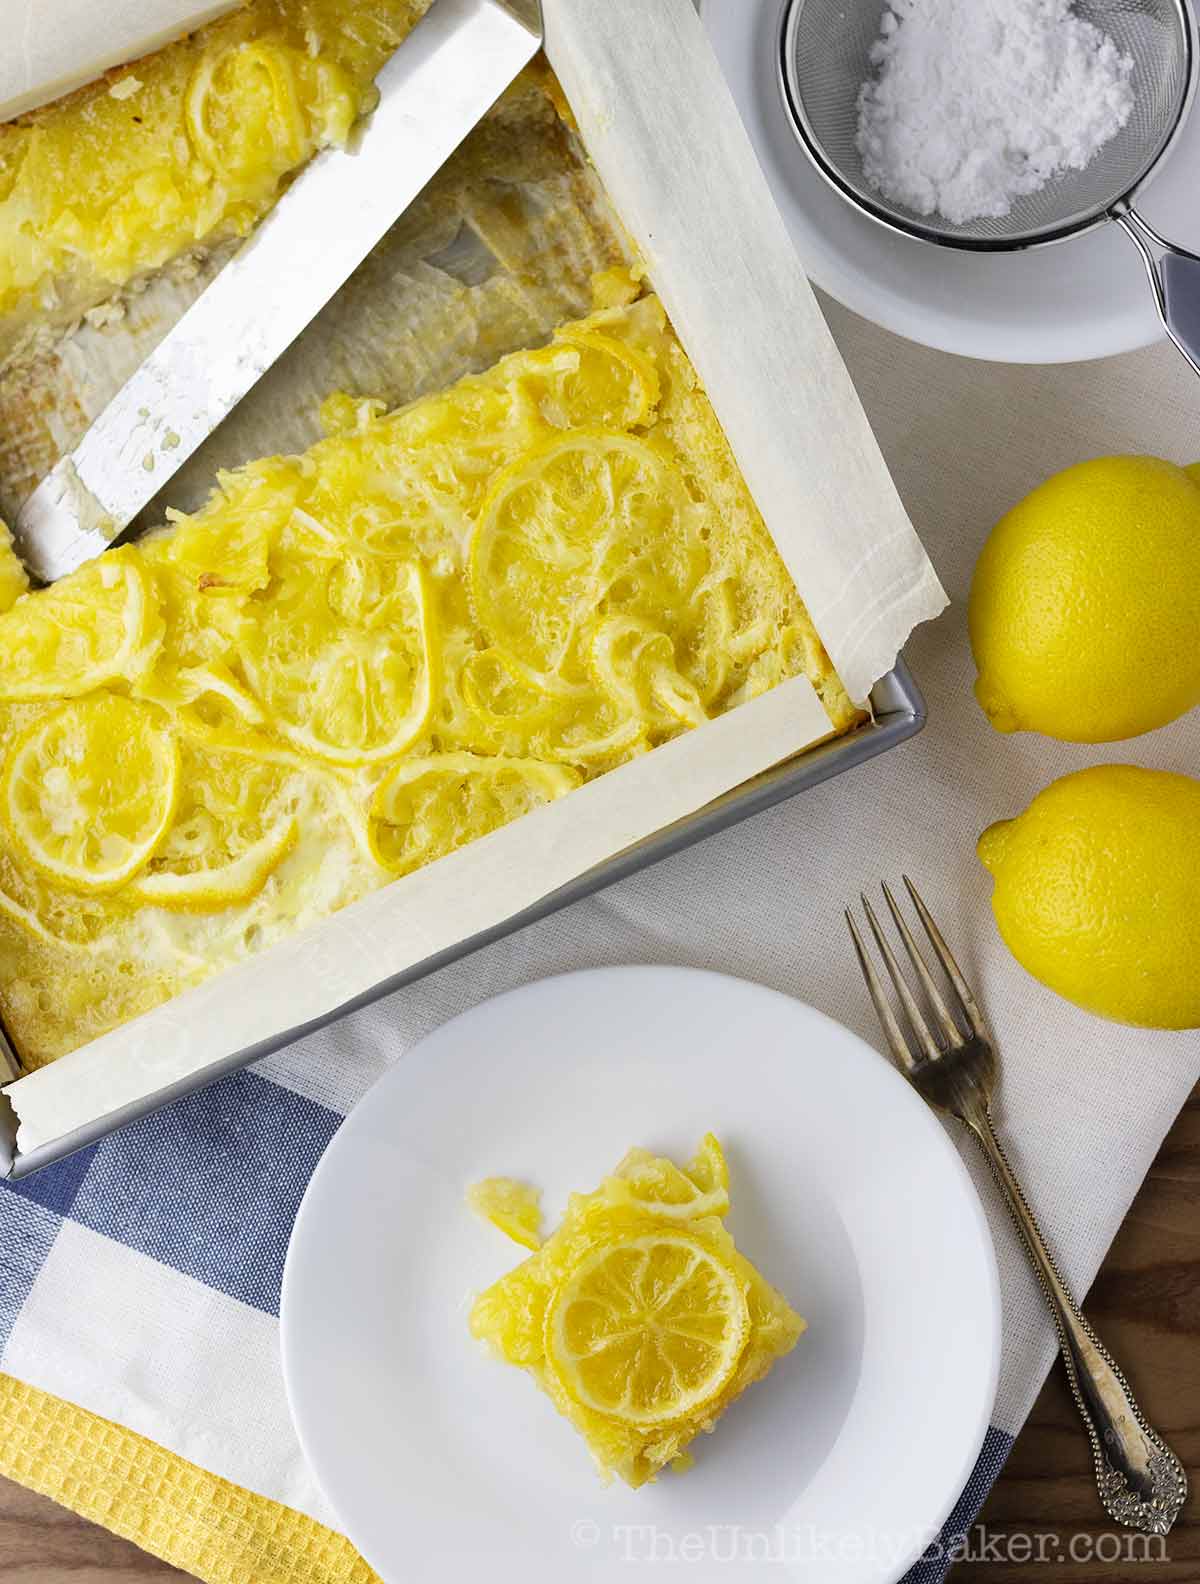 Shaker Lemon Bars (Whole Lemon Bars Recipe)